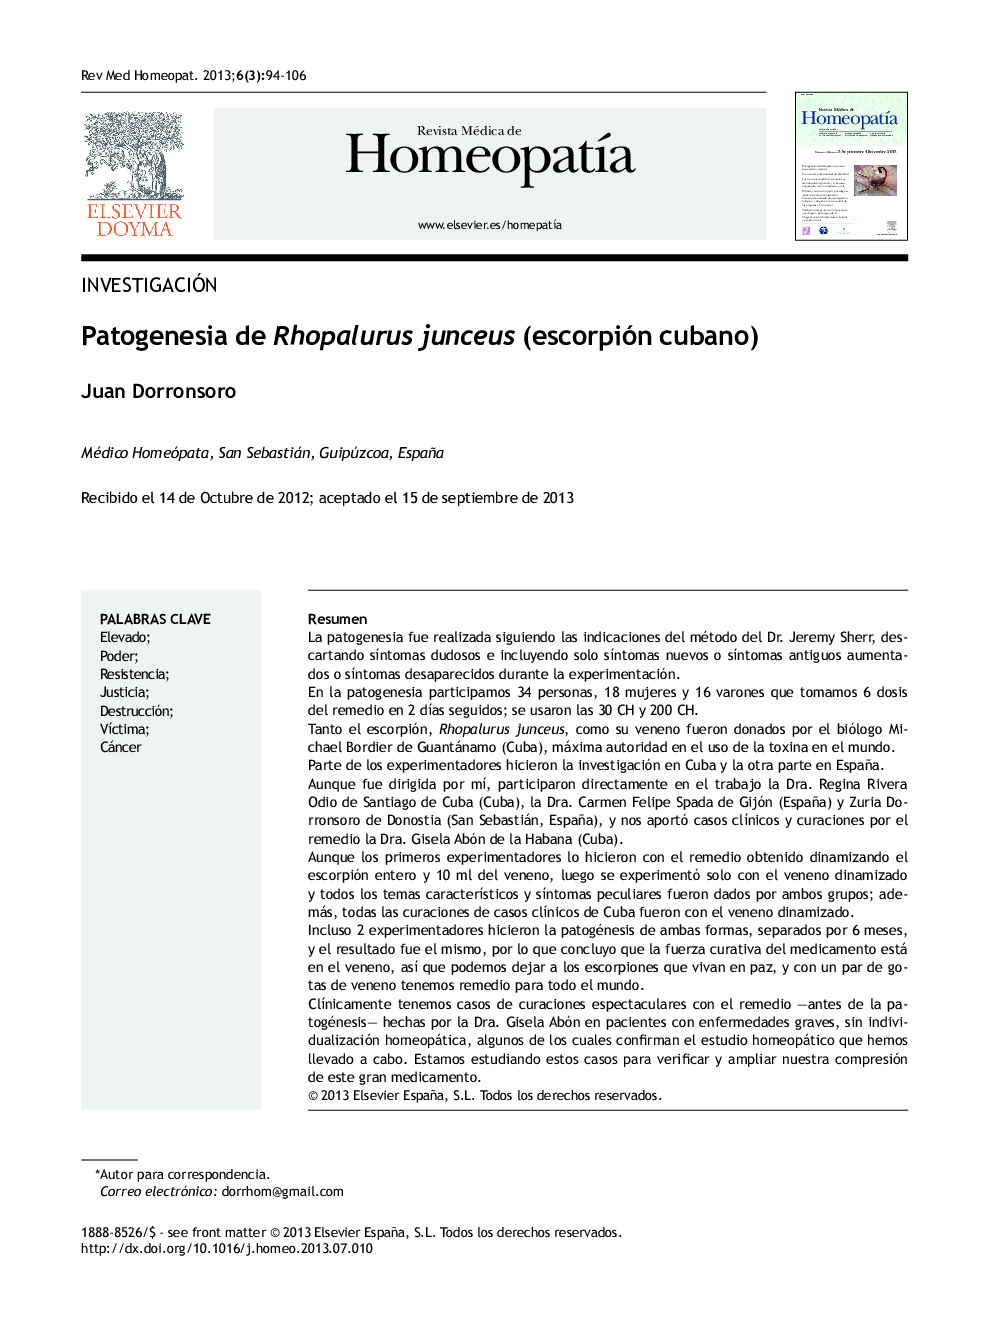 Patogenesia de Rhopalurus junceus (escorpión cubano)